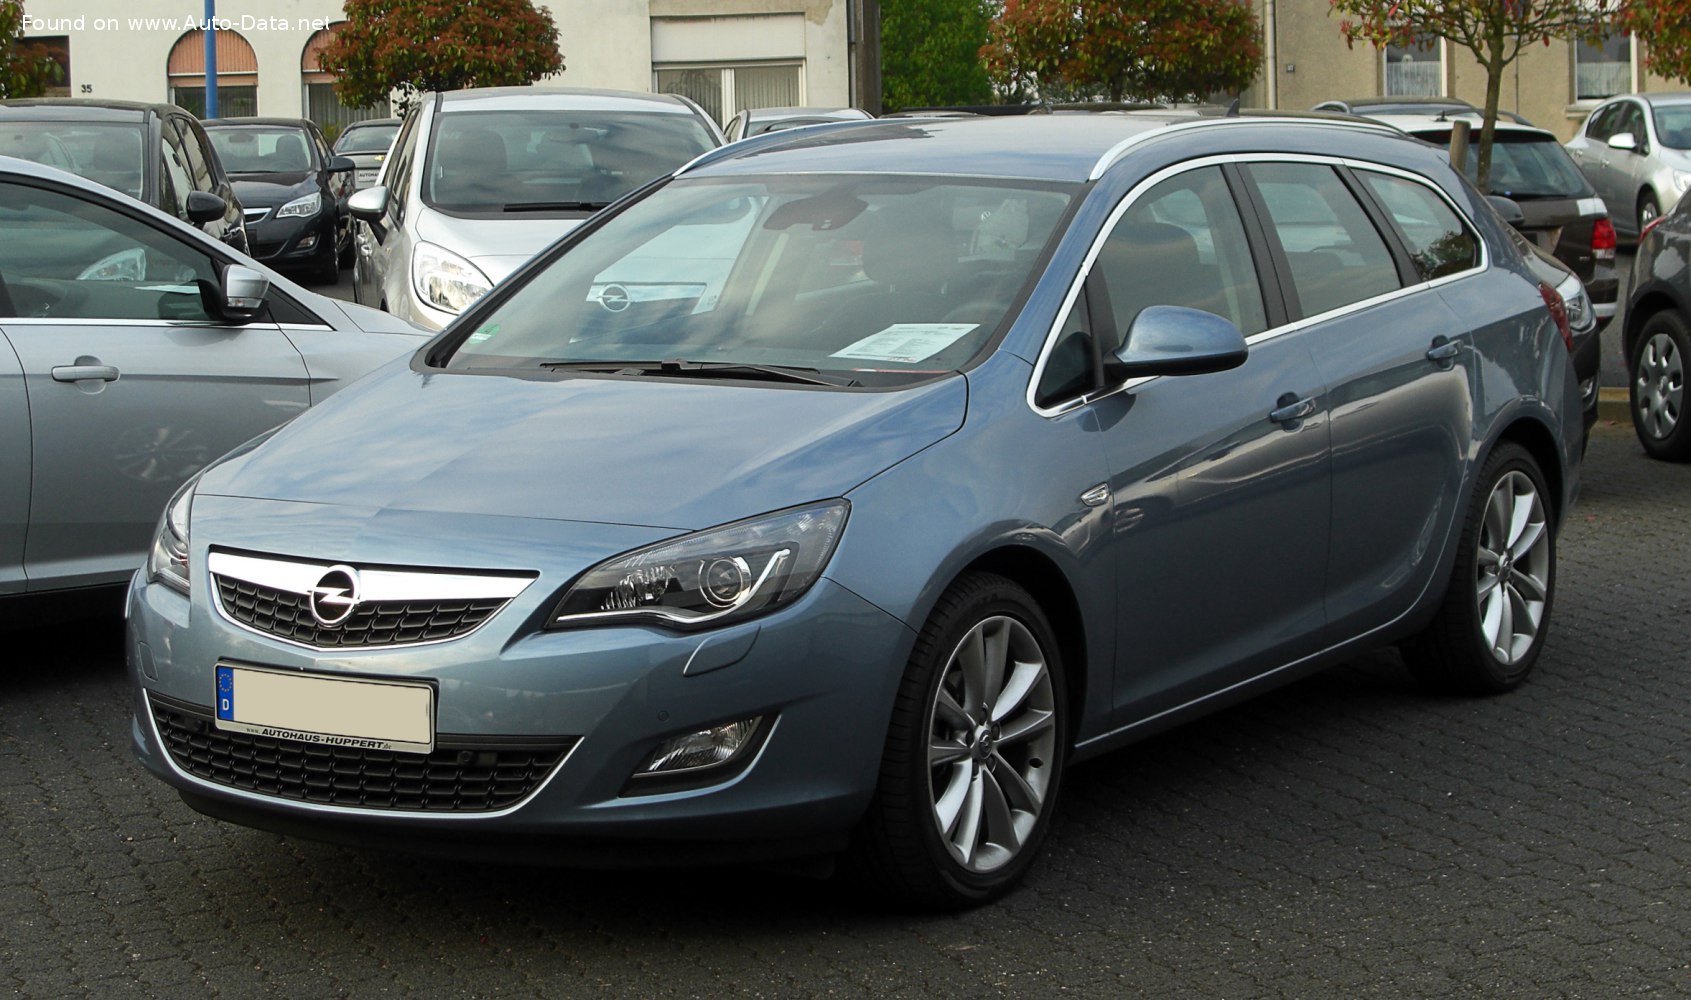 https://www.auto-data.net/images/f52/Opel-Astra-J-Sports-Tourer.jpg